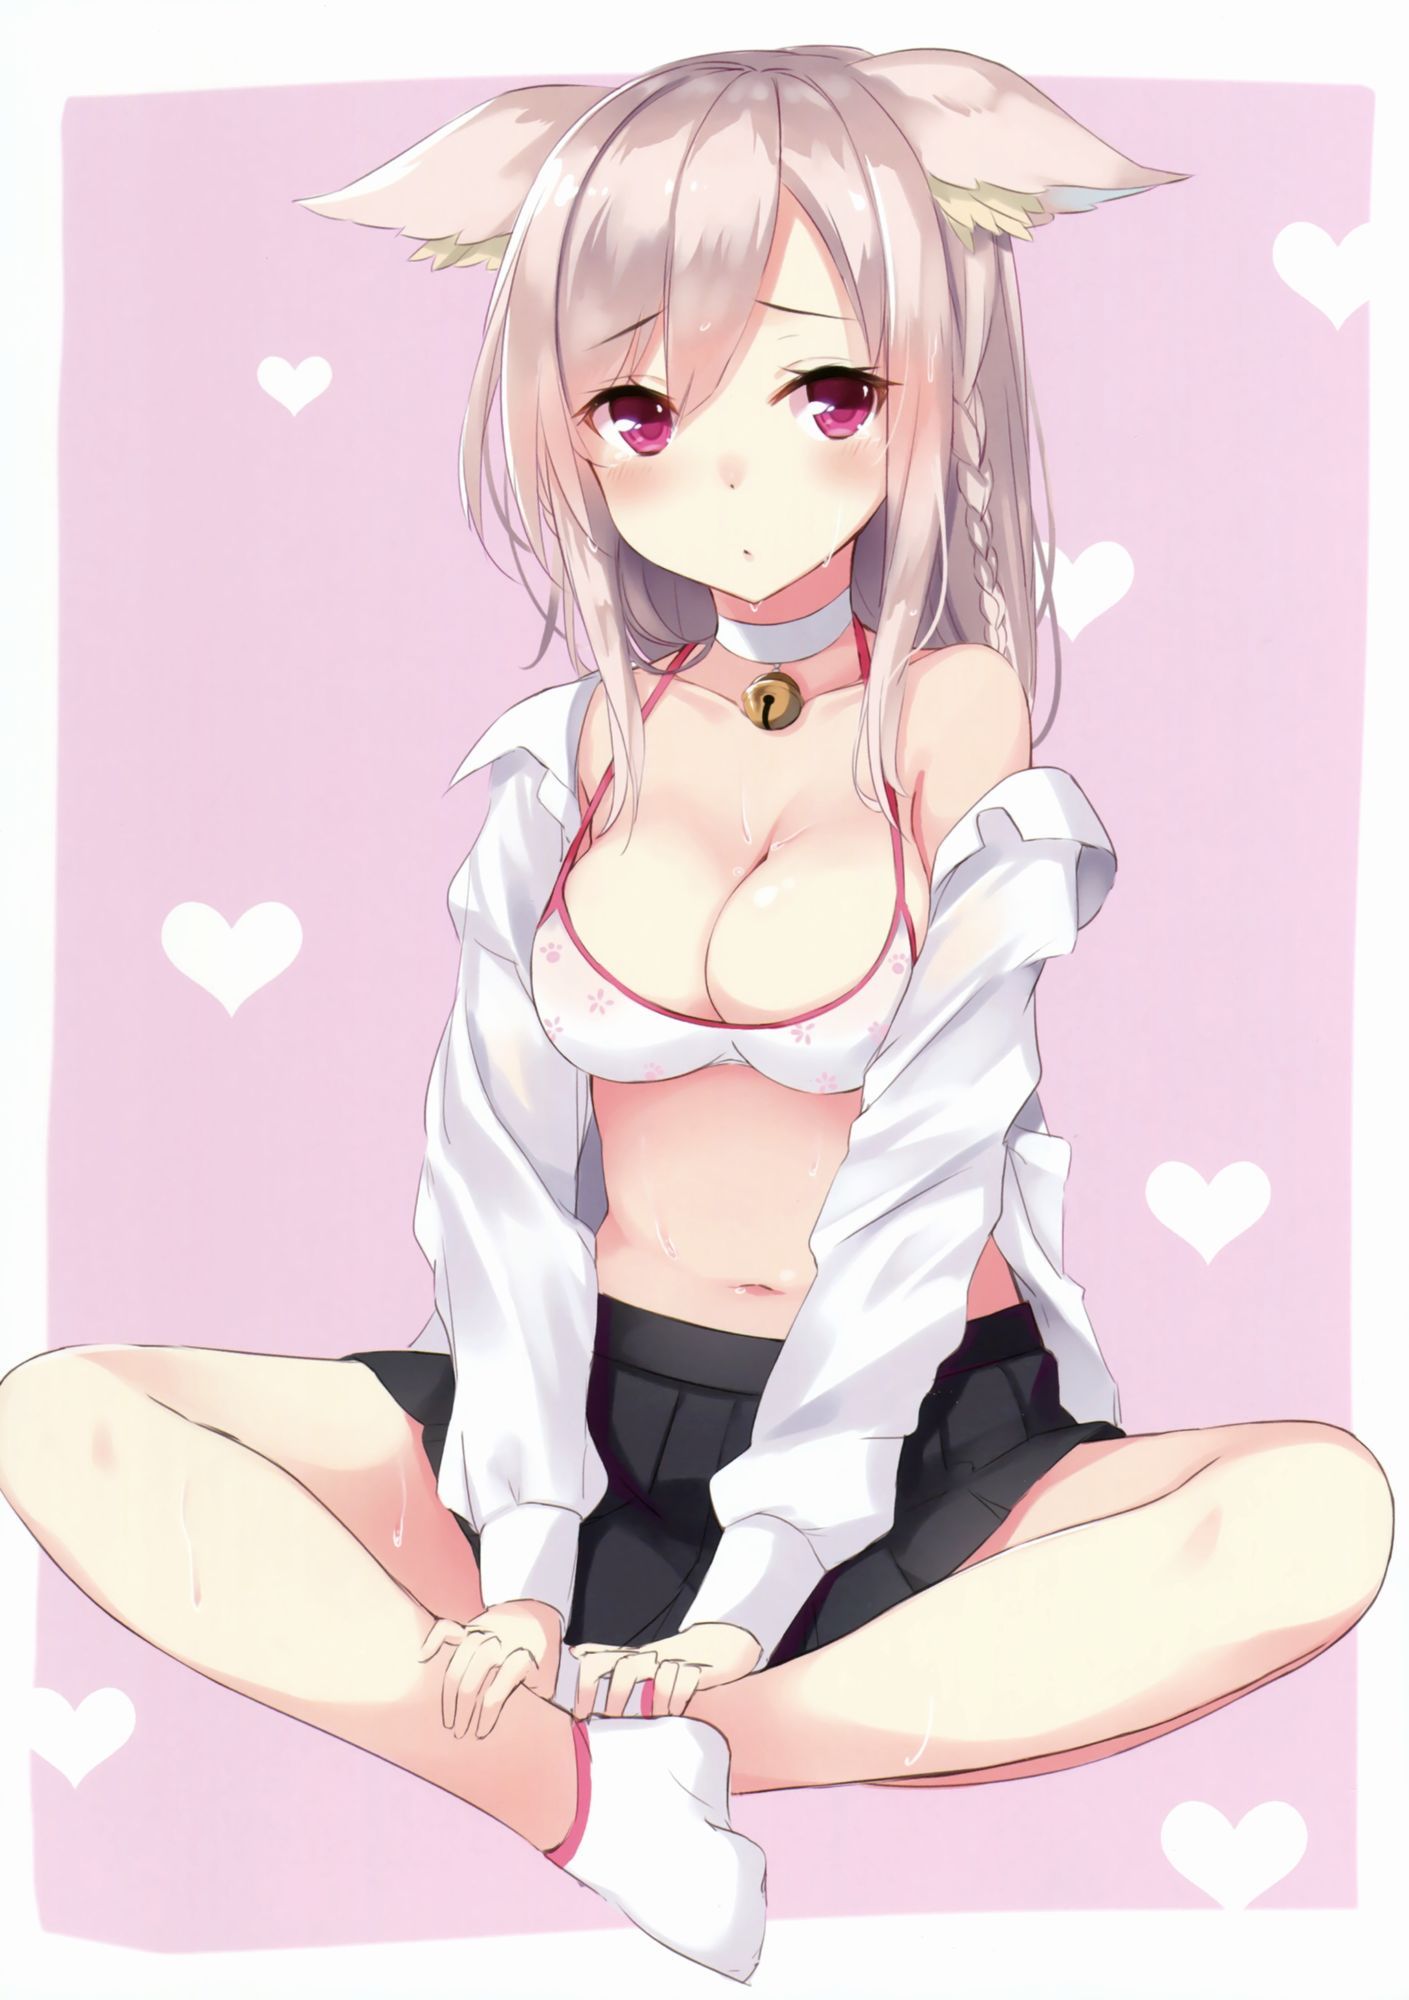 【Erotic Anime Summary】 Erotic image of a creepy girl wearing white pure white underwear 【Secondary erotic】 4